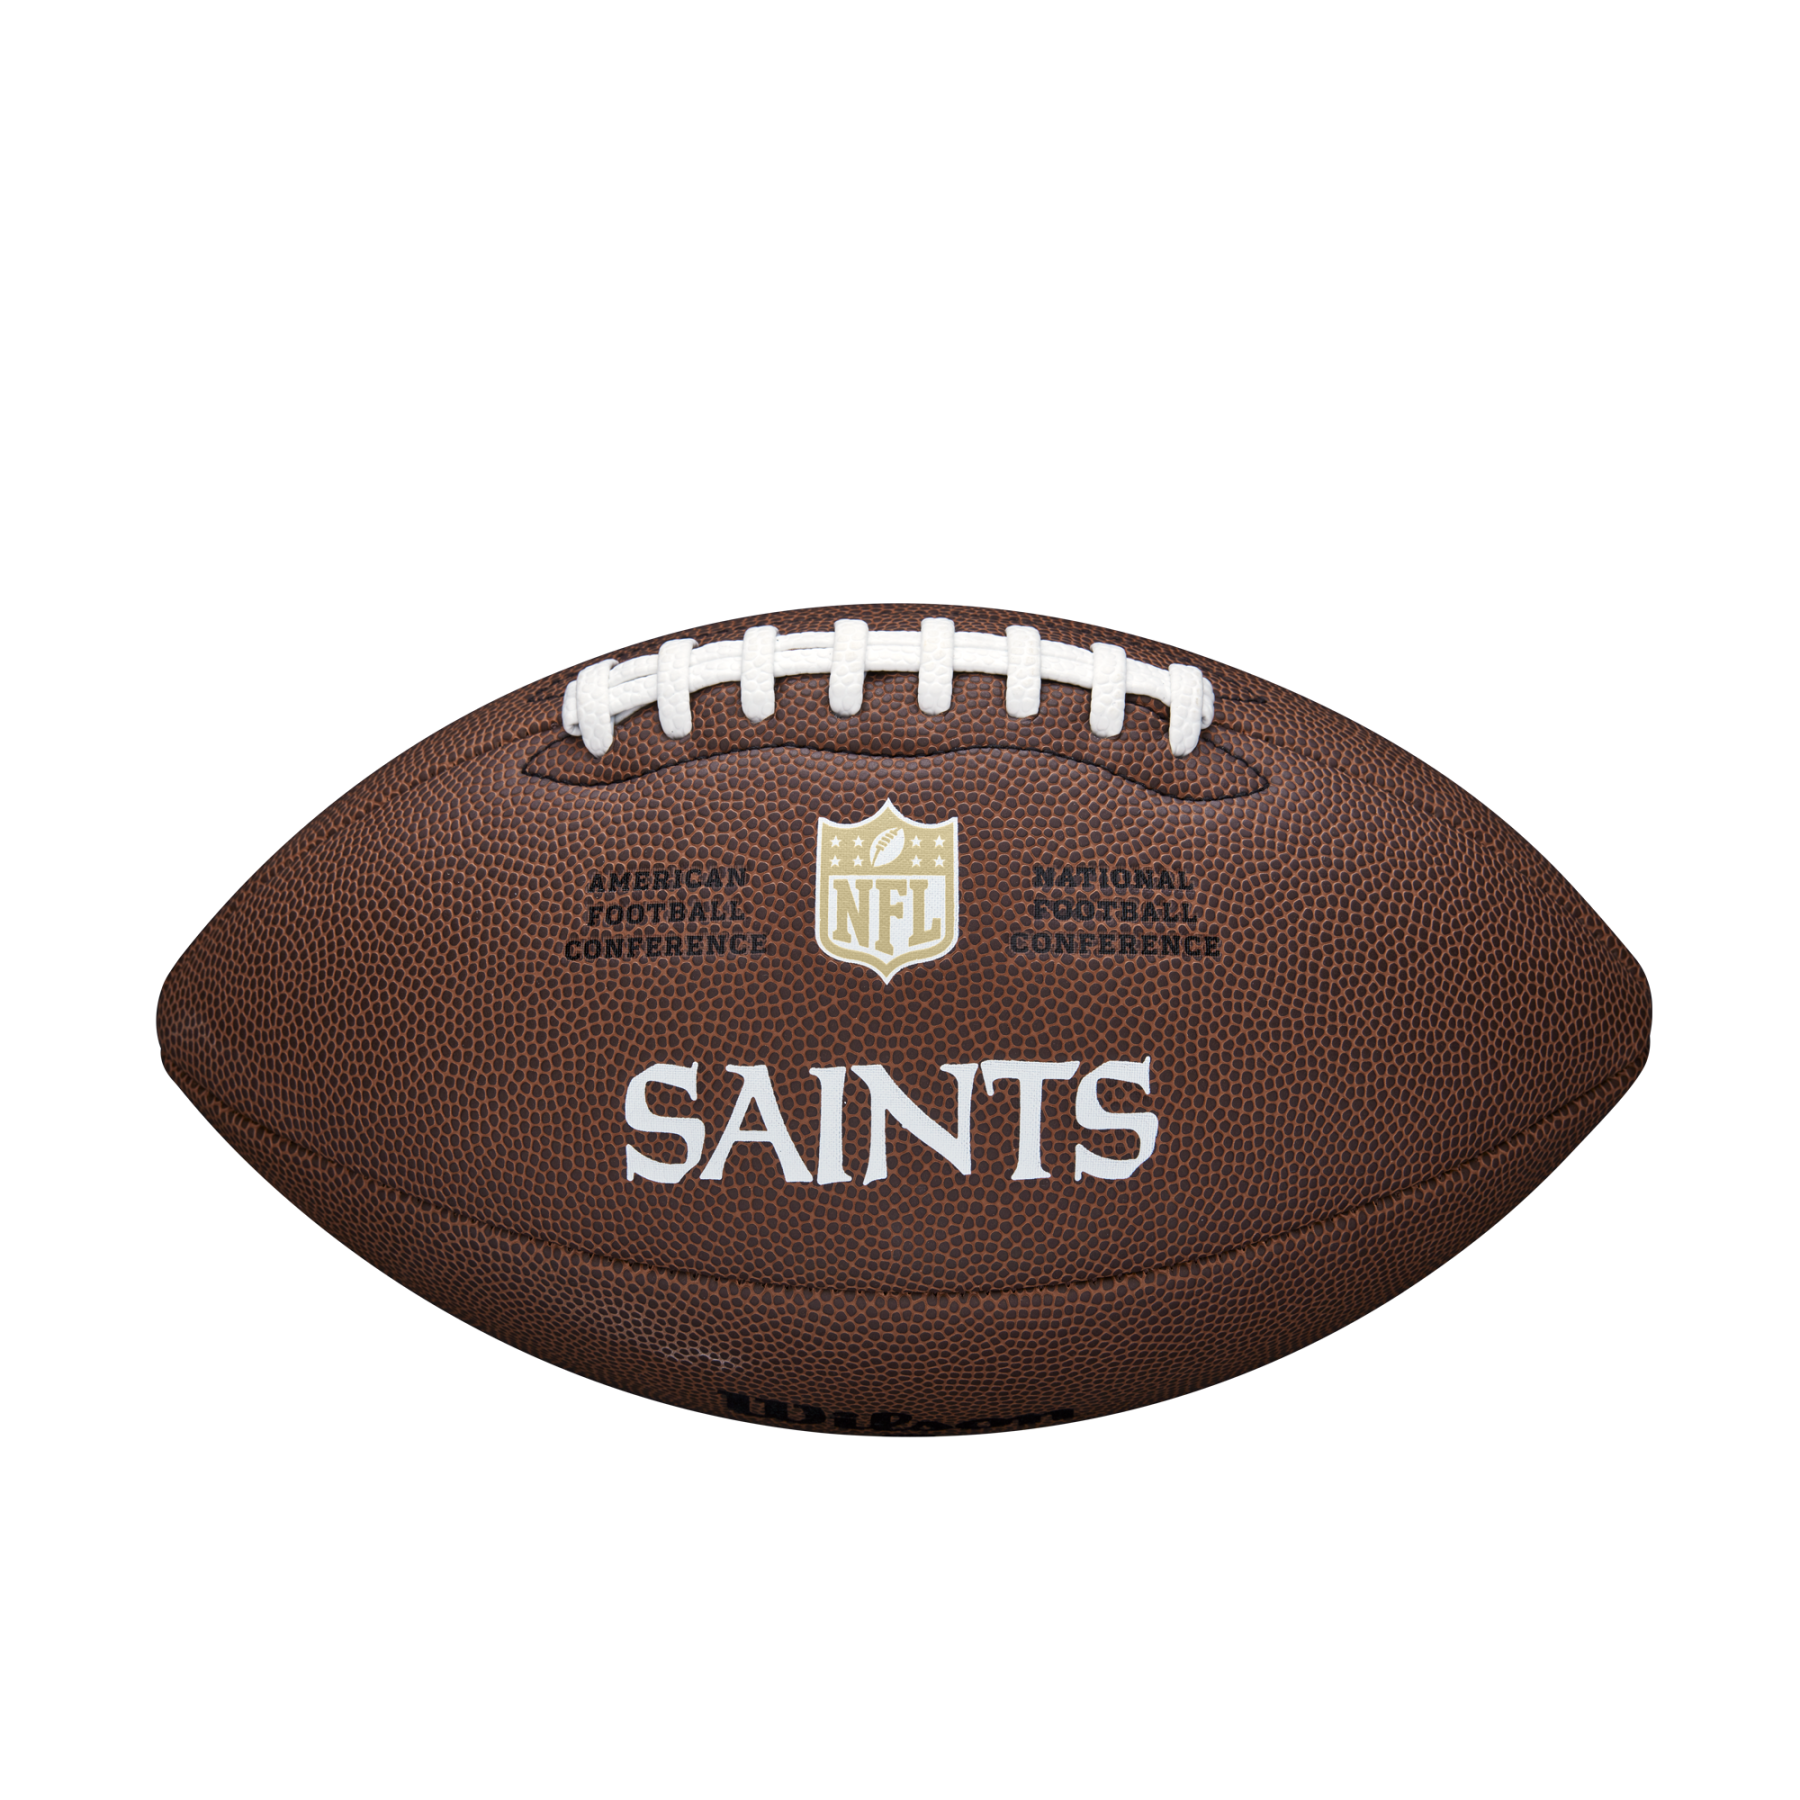 Wilson Saints NFL Licensed